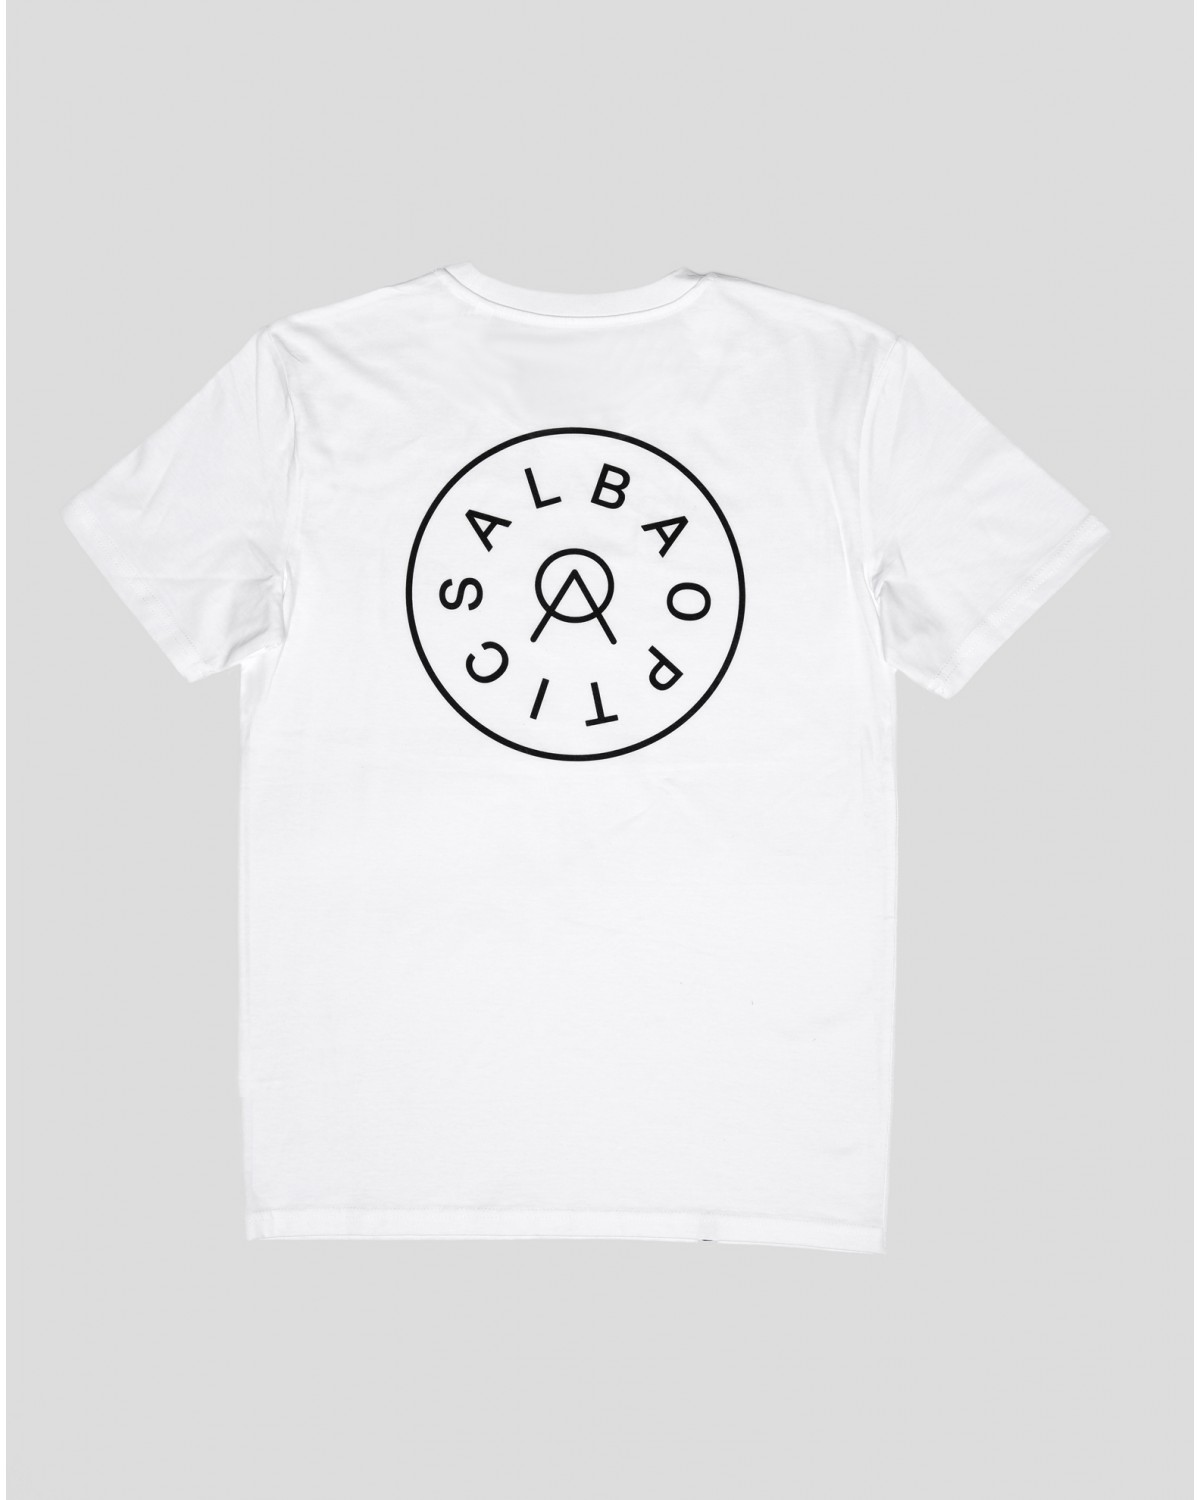 Alba Optics LOGO T-Shirt weiß